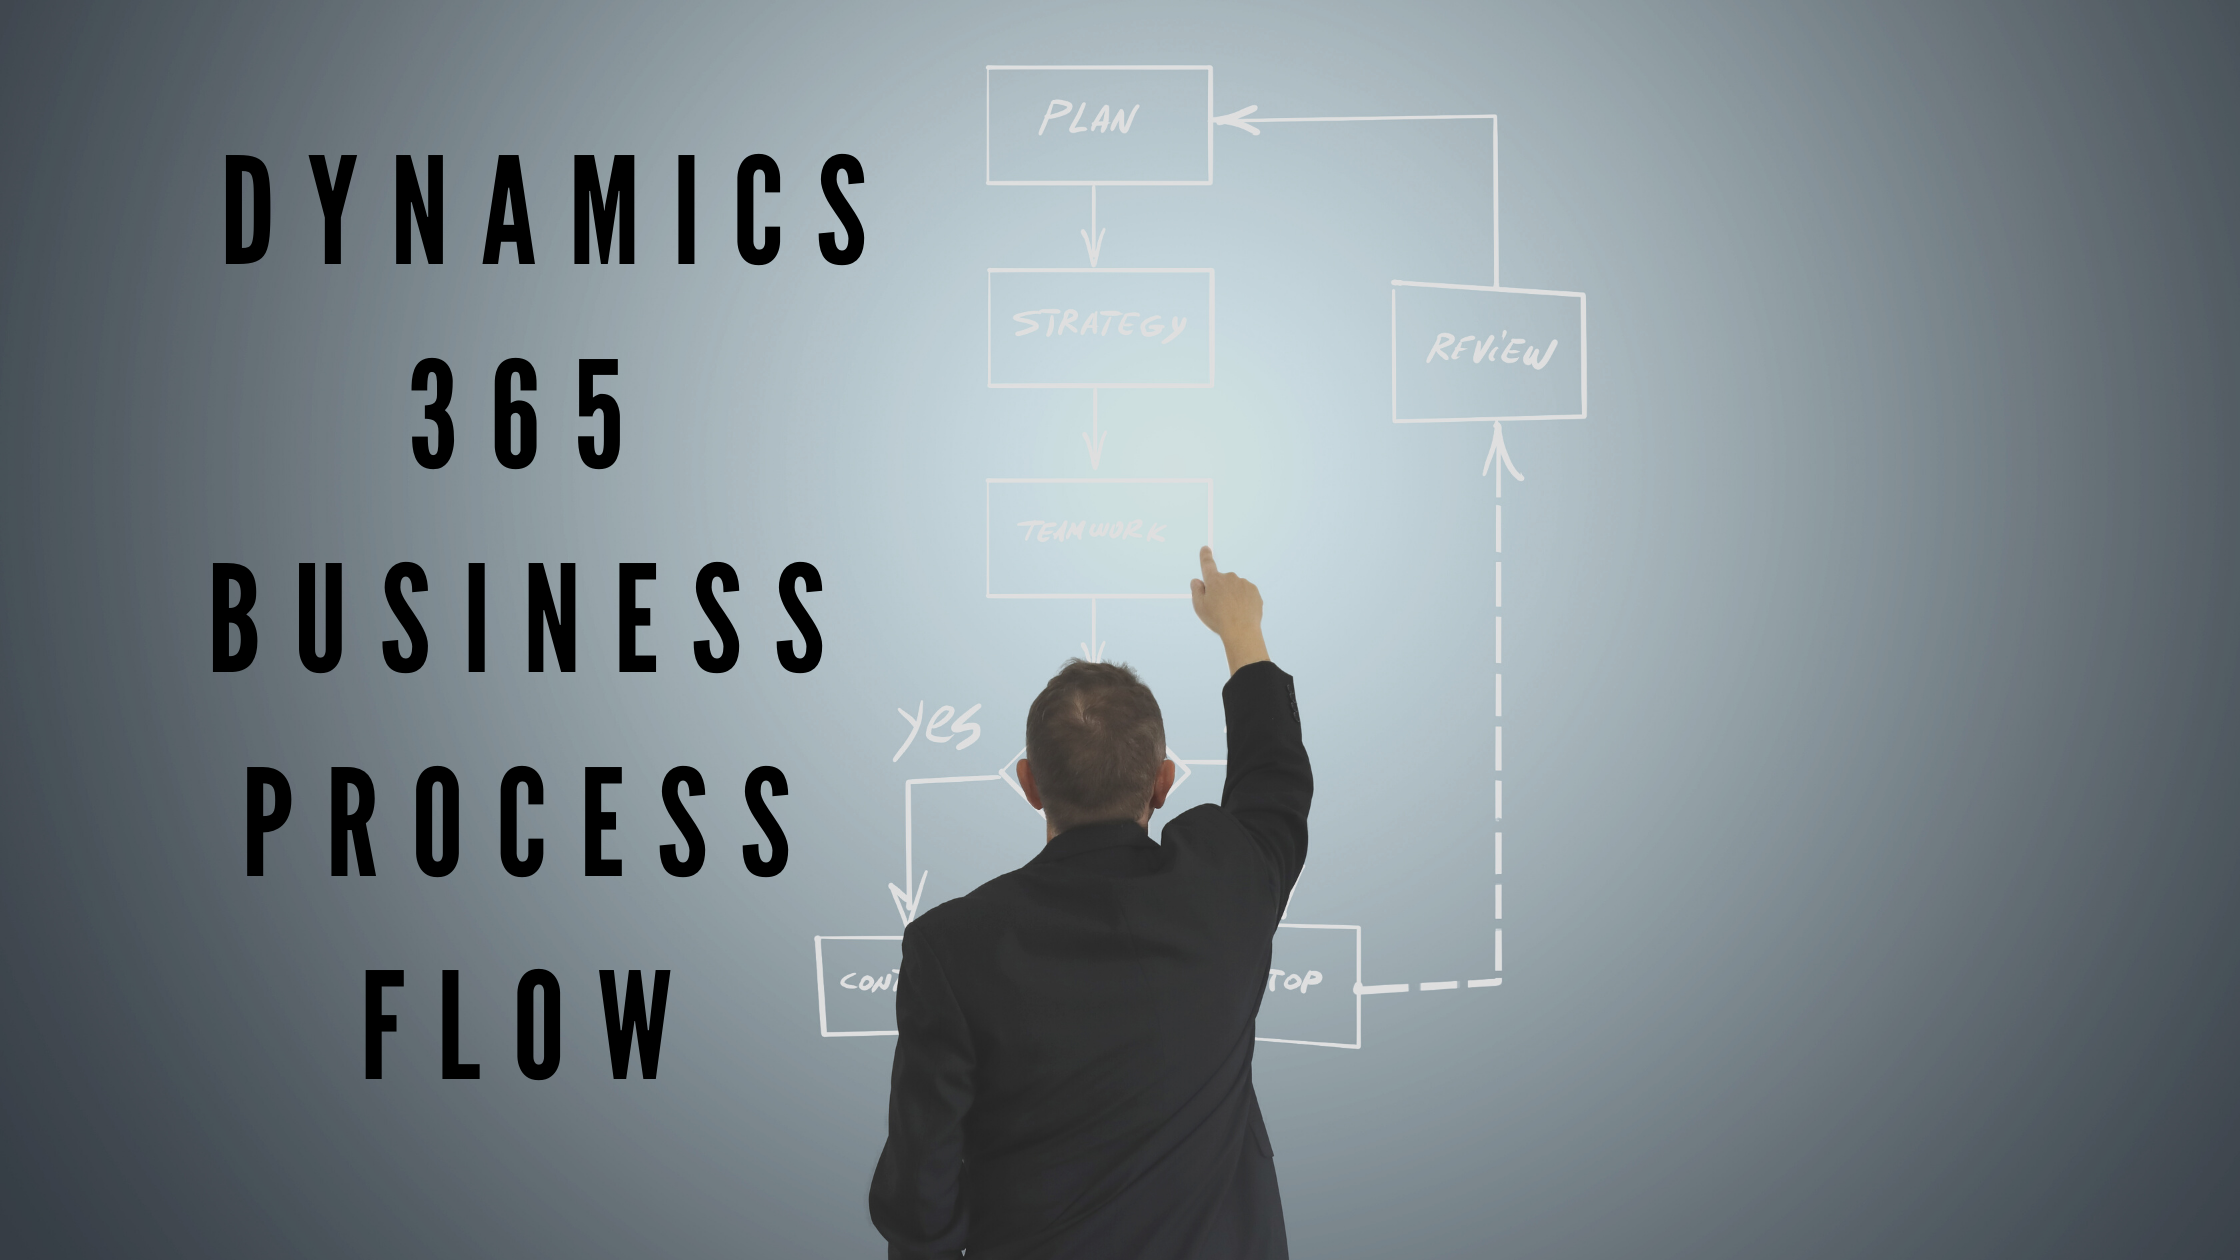 Business Process Flow